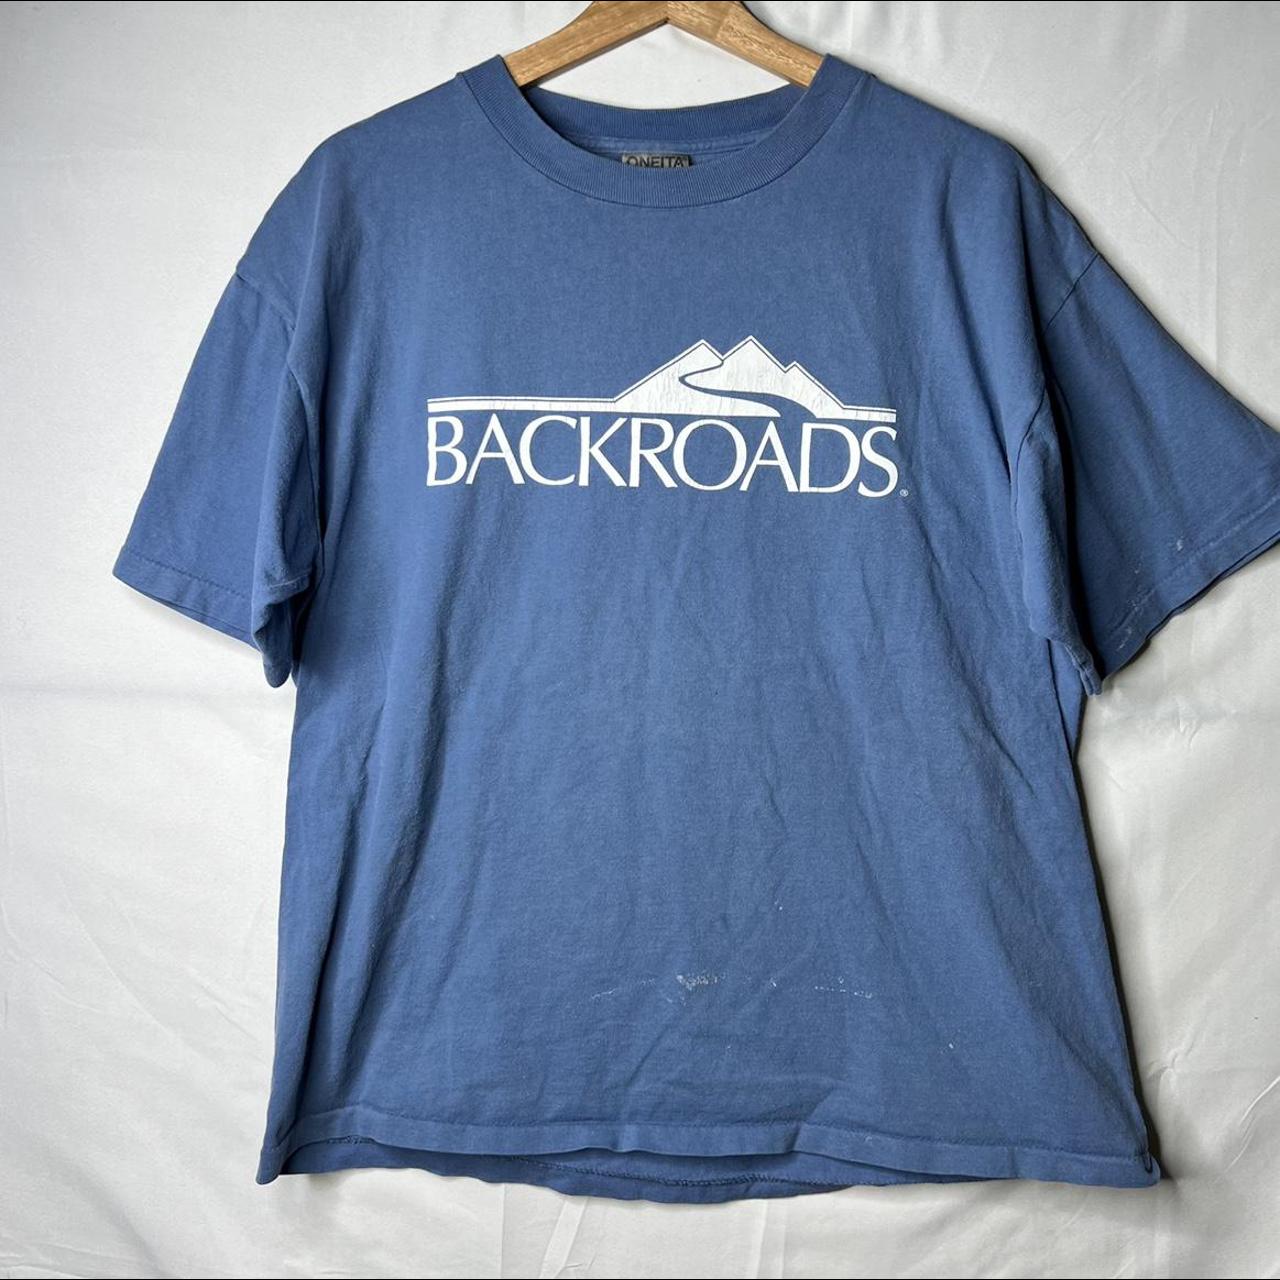 Product Image 1 - Vintage 90s “Backroads” Graphic T-Shirt

Size